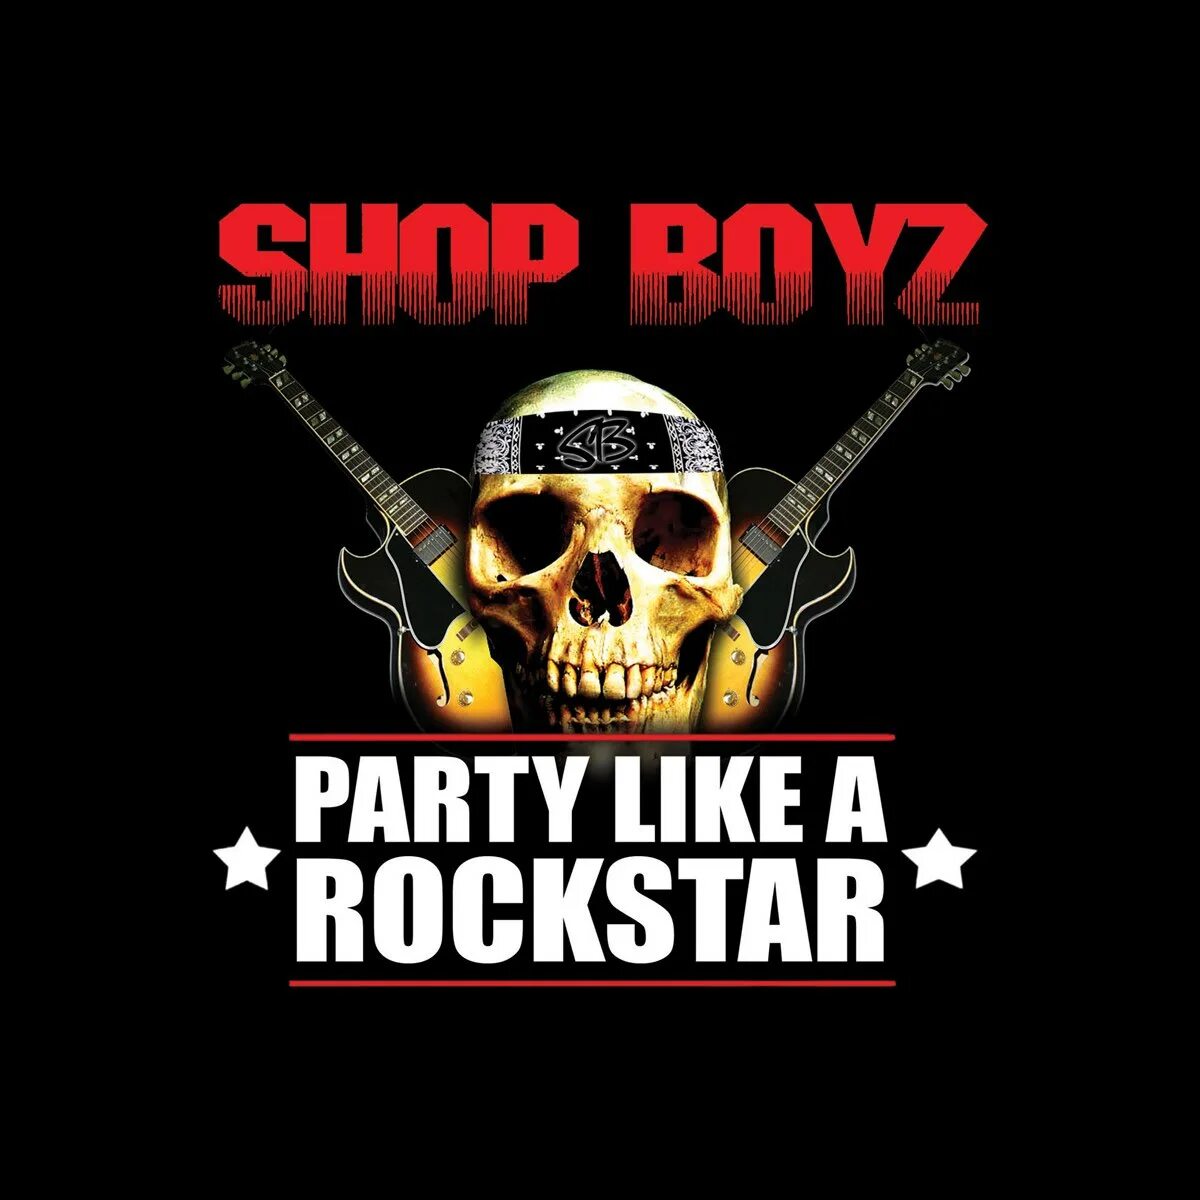 So i party like a rockstar текст. Shop Boyz Party like a Rockstar. Party like a Rockstar. Shop boys - Rockstar Mentality. Вайт панк рокстар обложка.